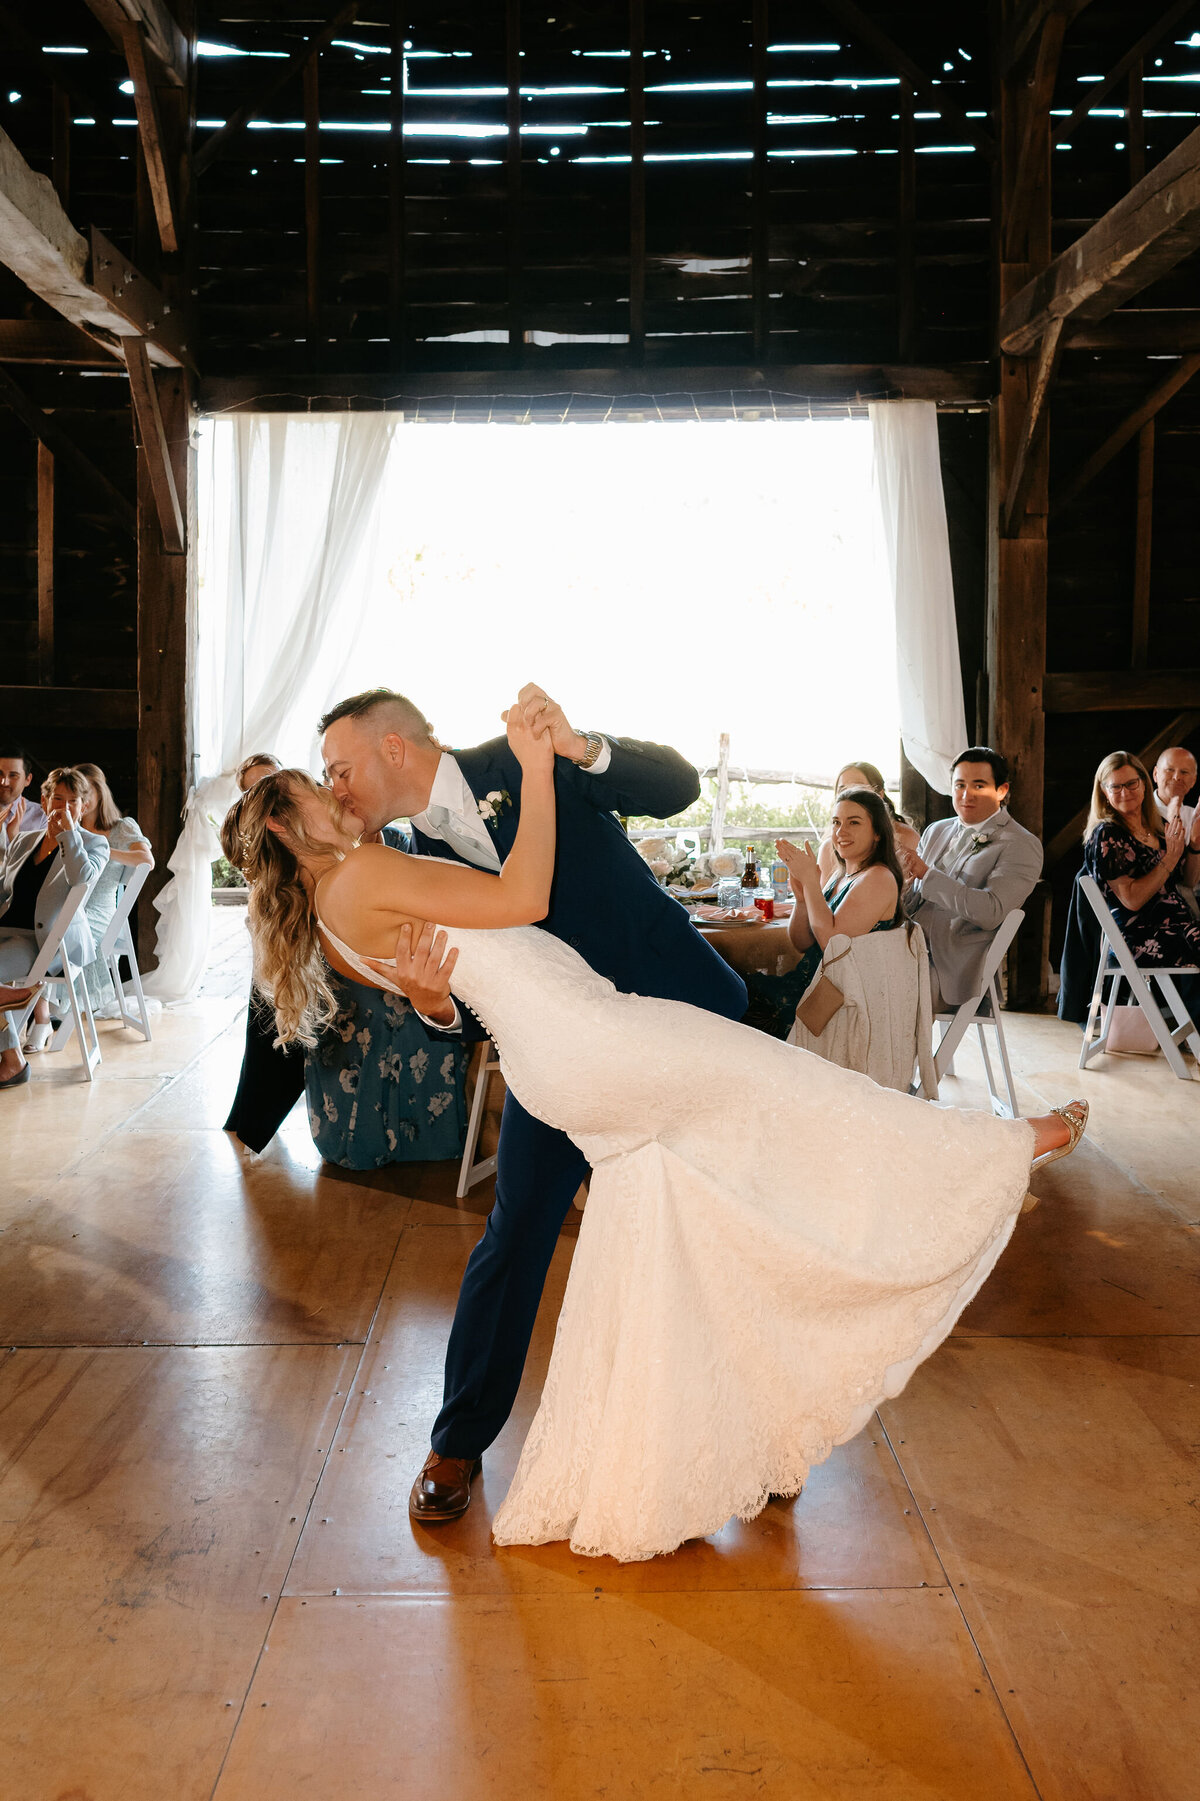 Wedding Dance Photo by Lisa Blanche Photography